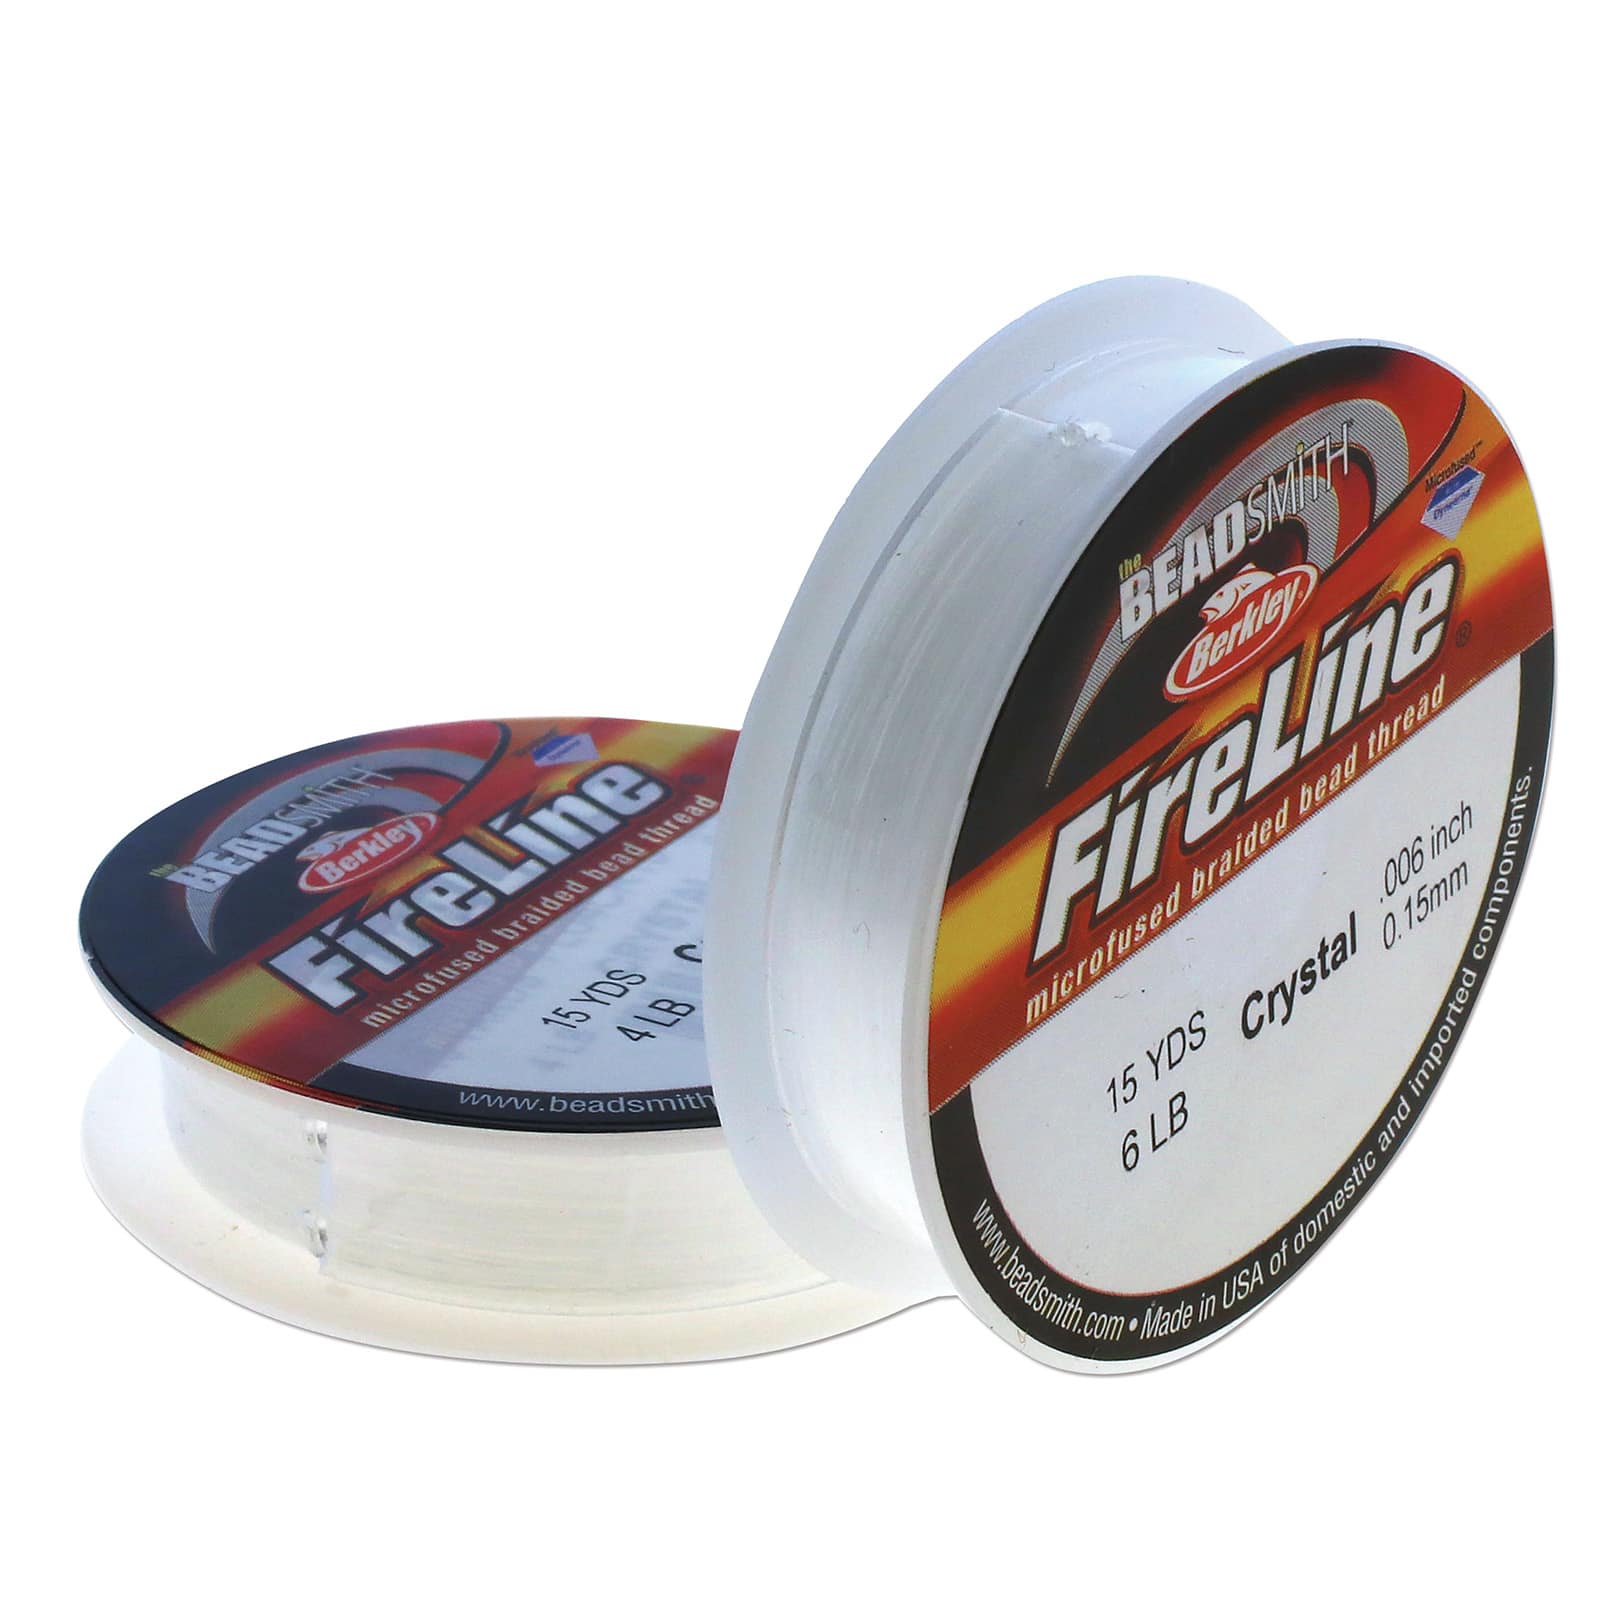 FireLine® Smoke Gray Bead Thread - RioGrande